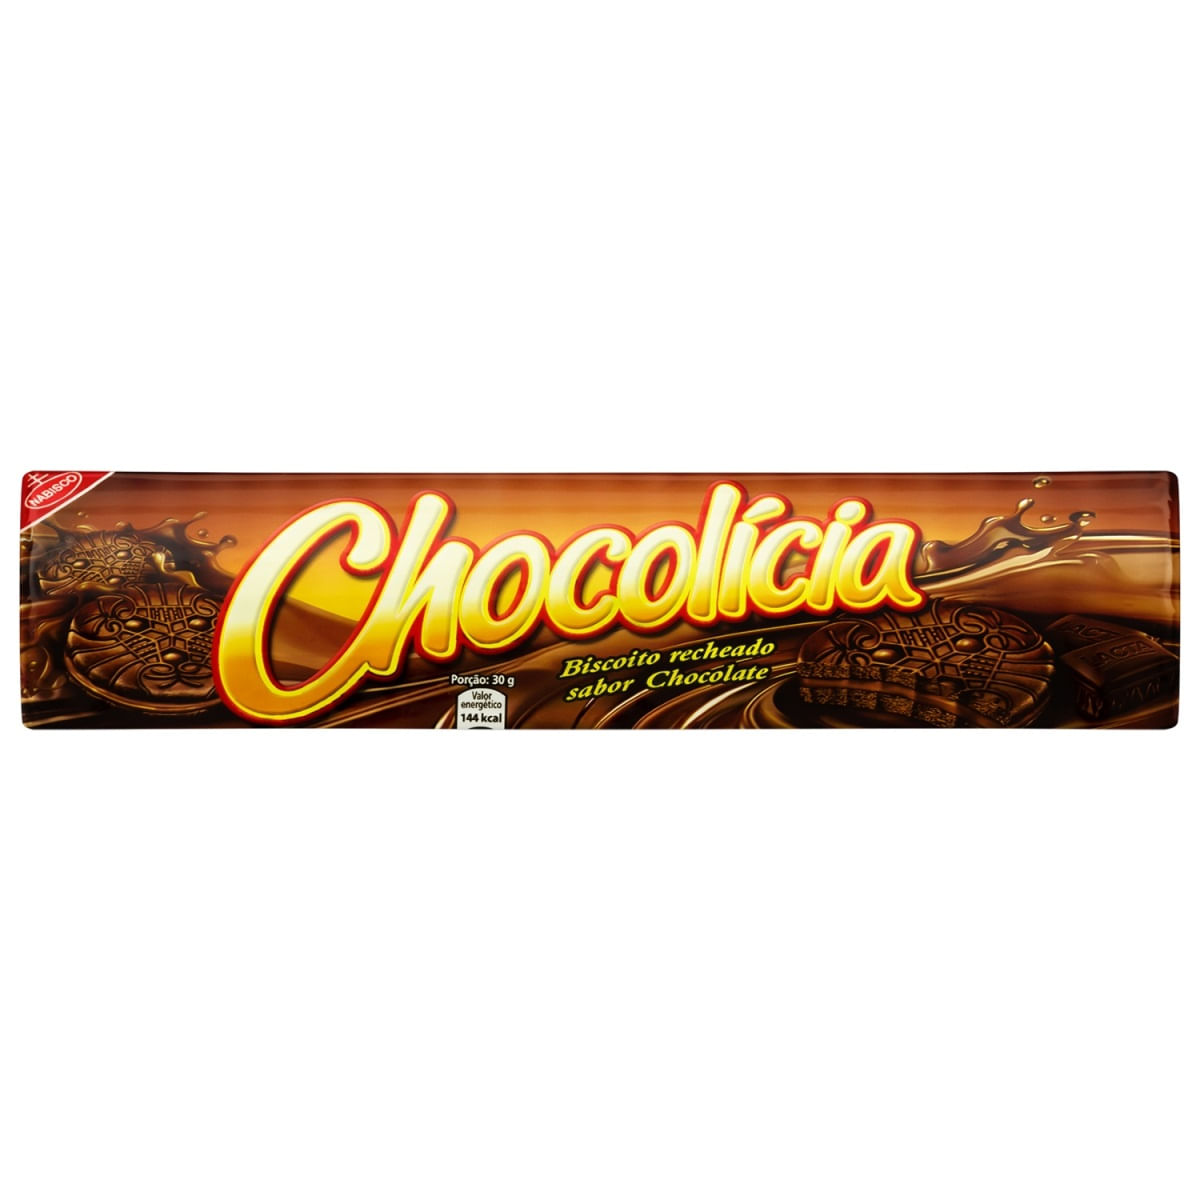 biscoito-recheado-chocolate-chocolicia-143g-1.jpg